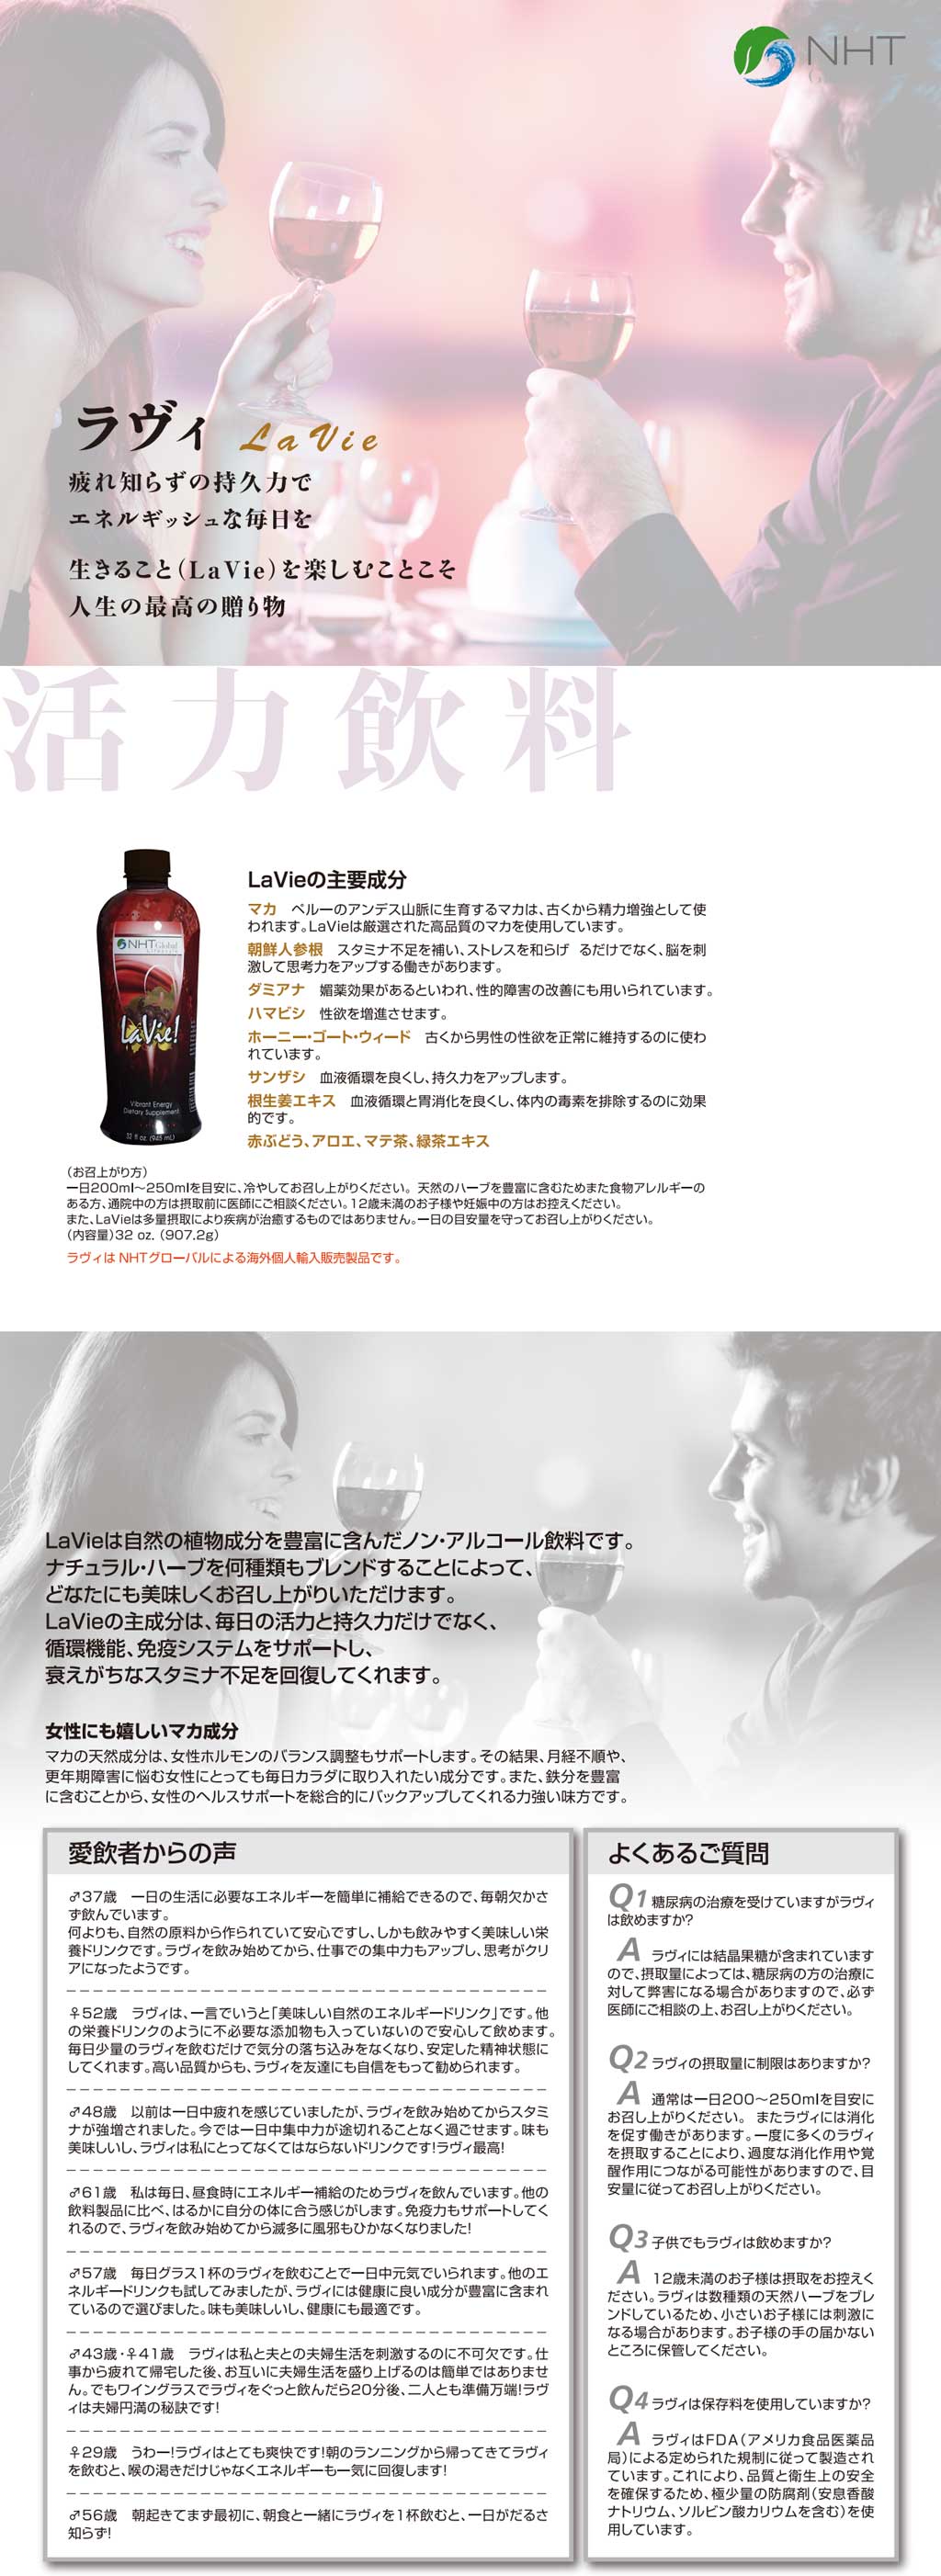 lavie energy drink japanese info nht global